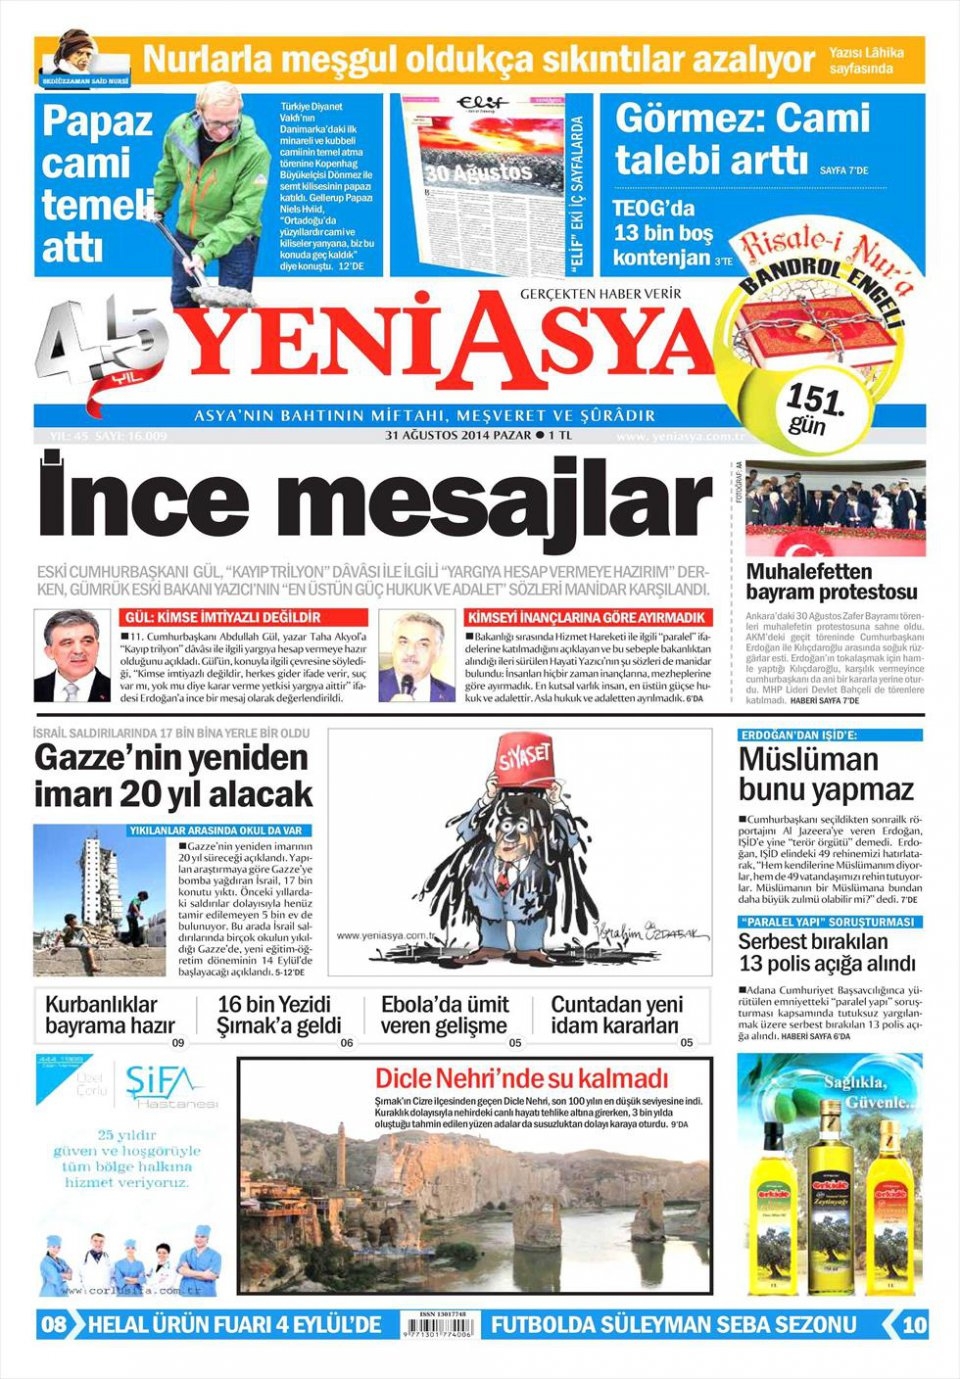 31 Ağustos 2014 gazete manşetleri 22